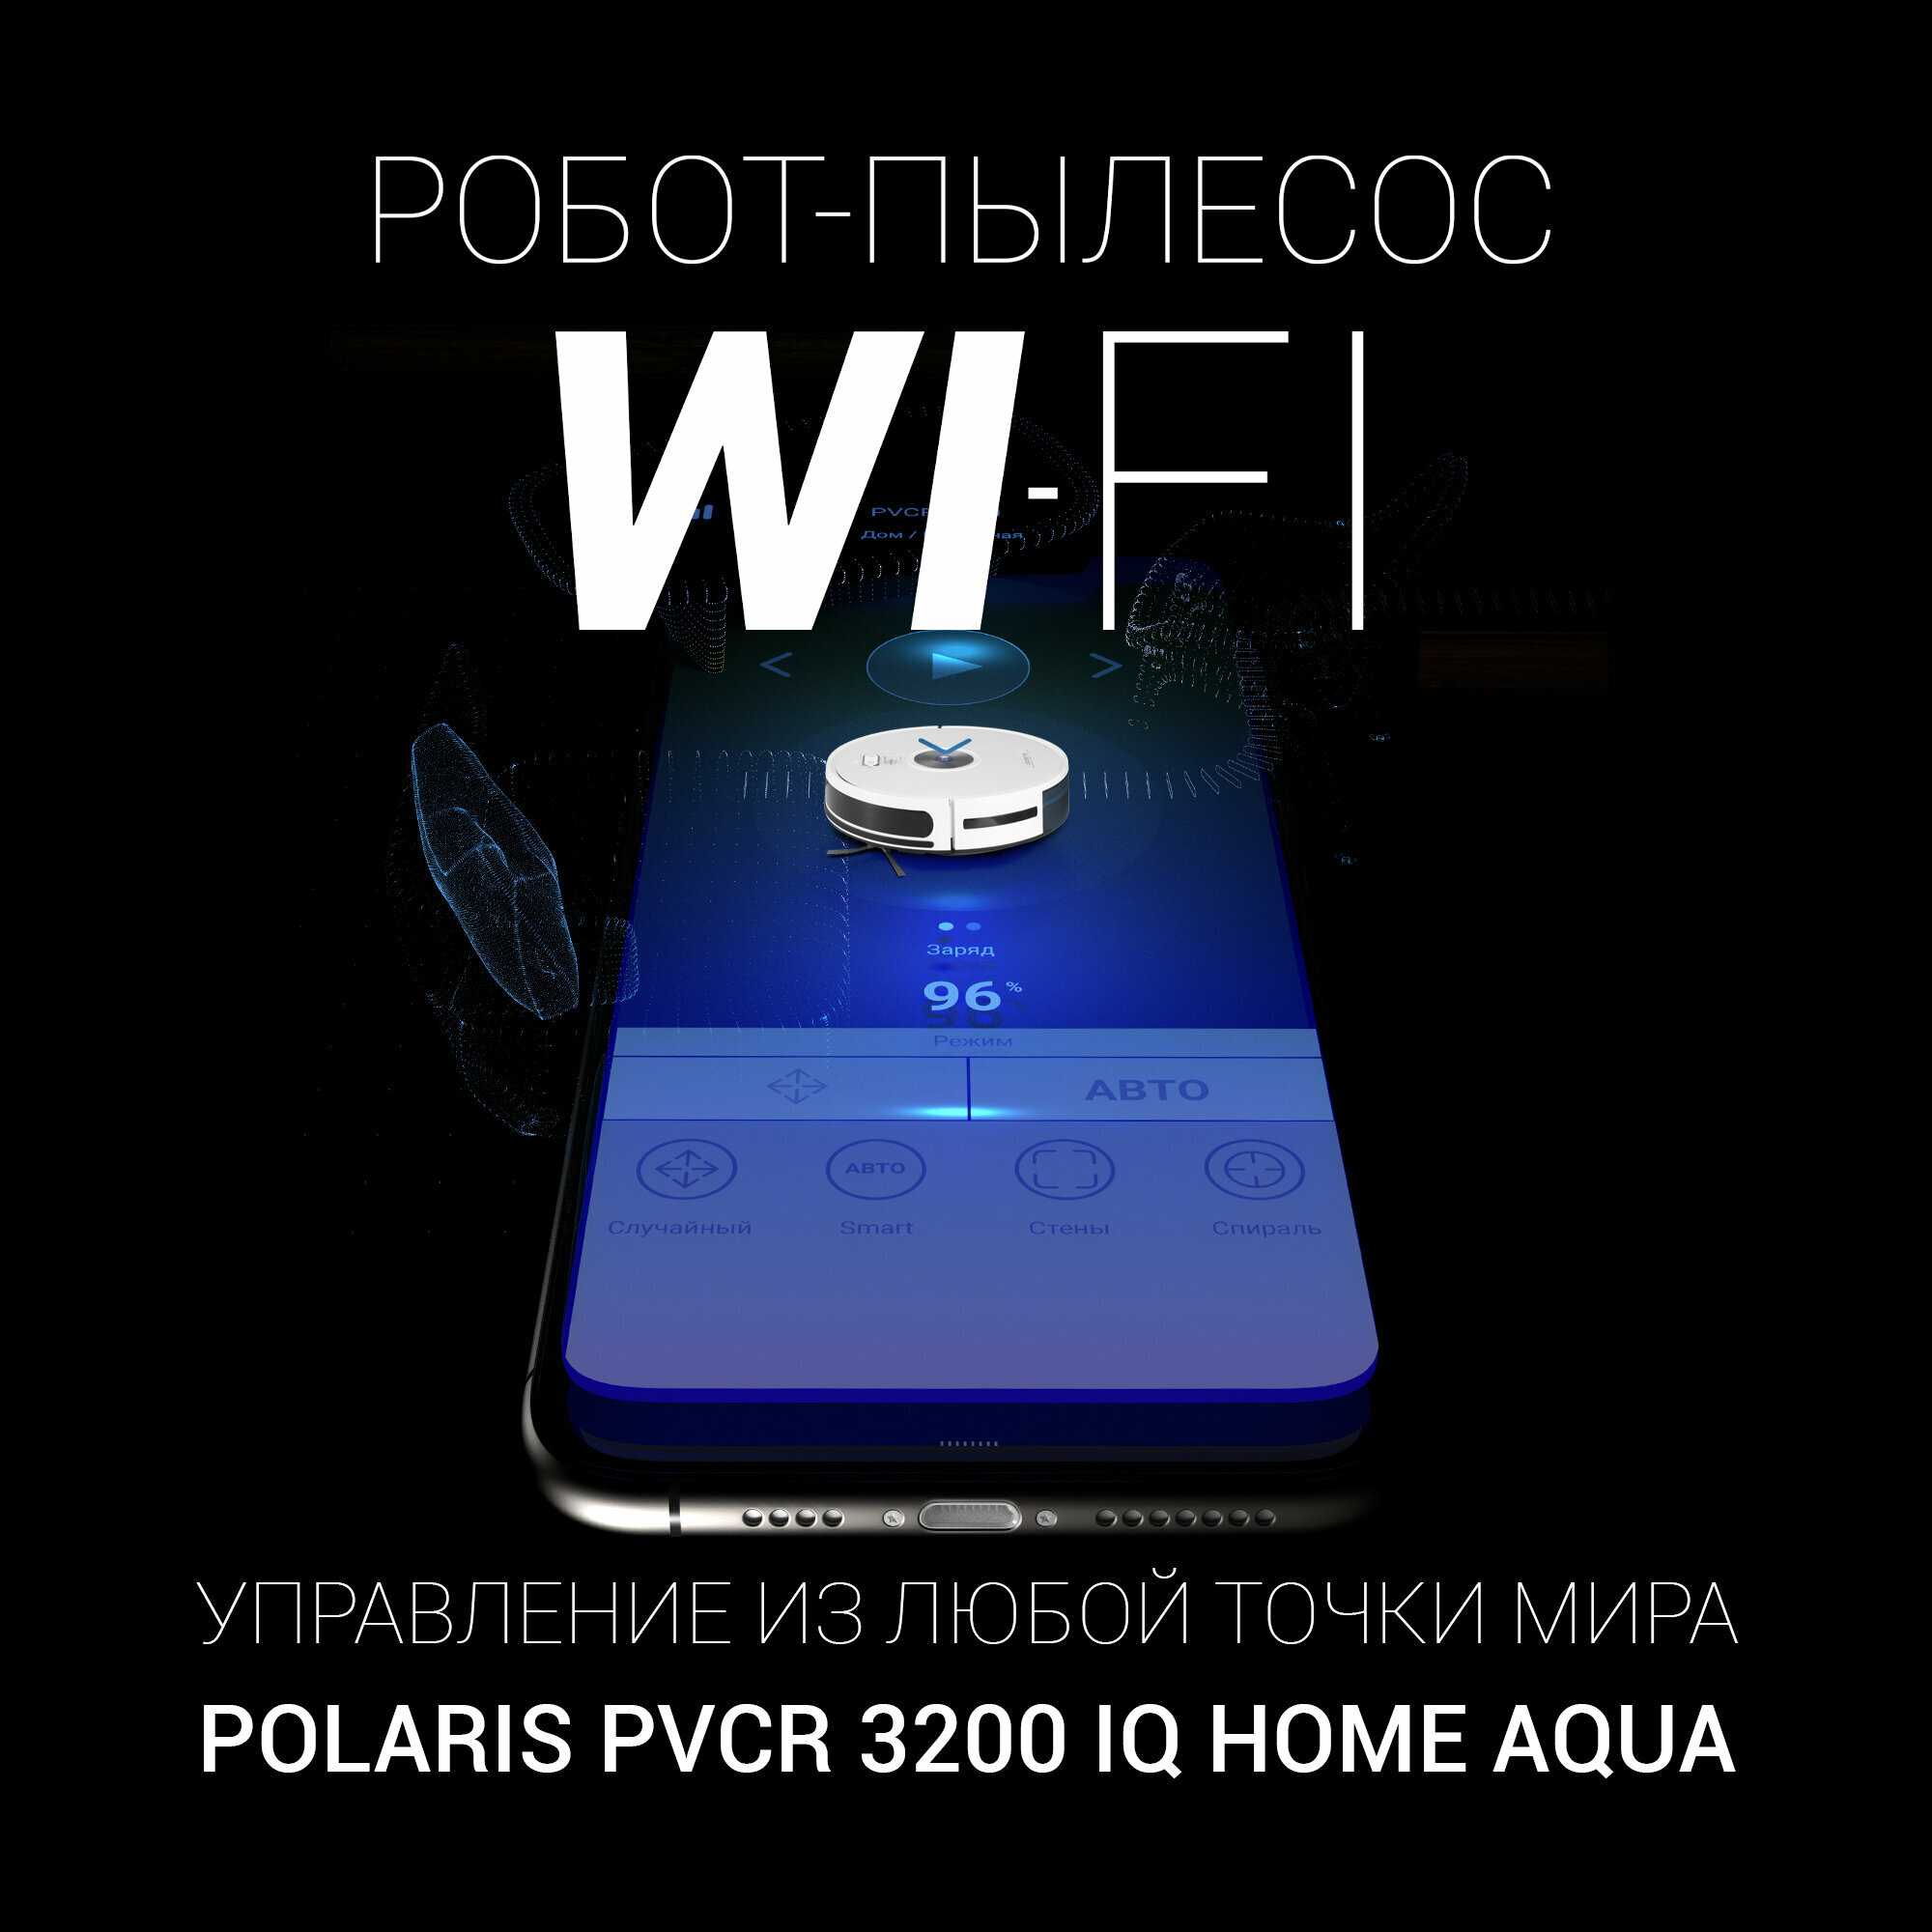 Робот-пылесос Polaris PVCR 3200 IQ Home Aqua - фото №2